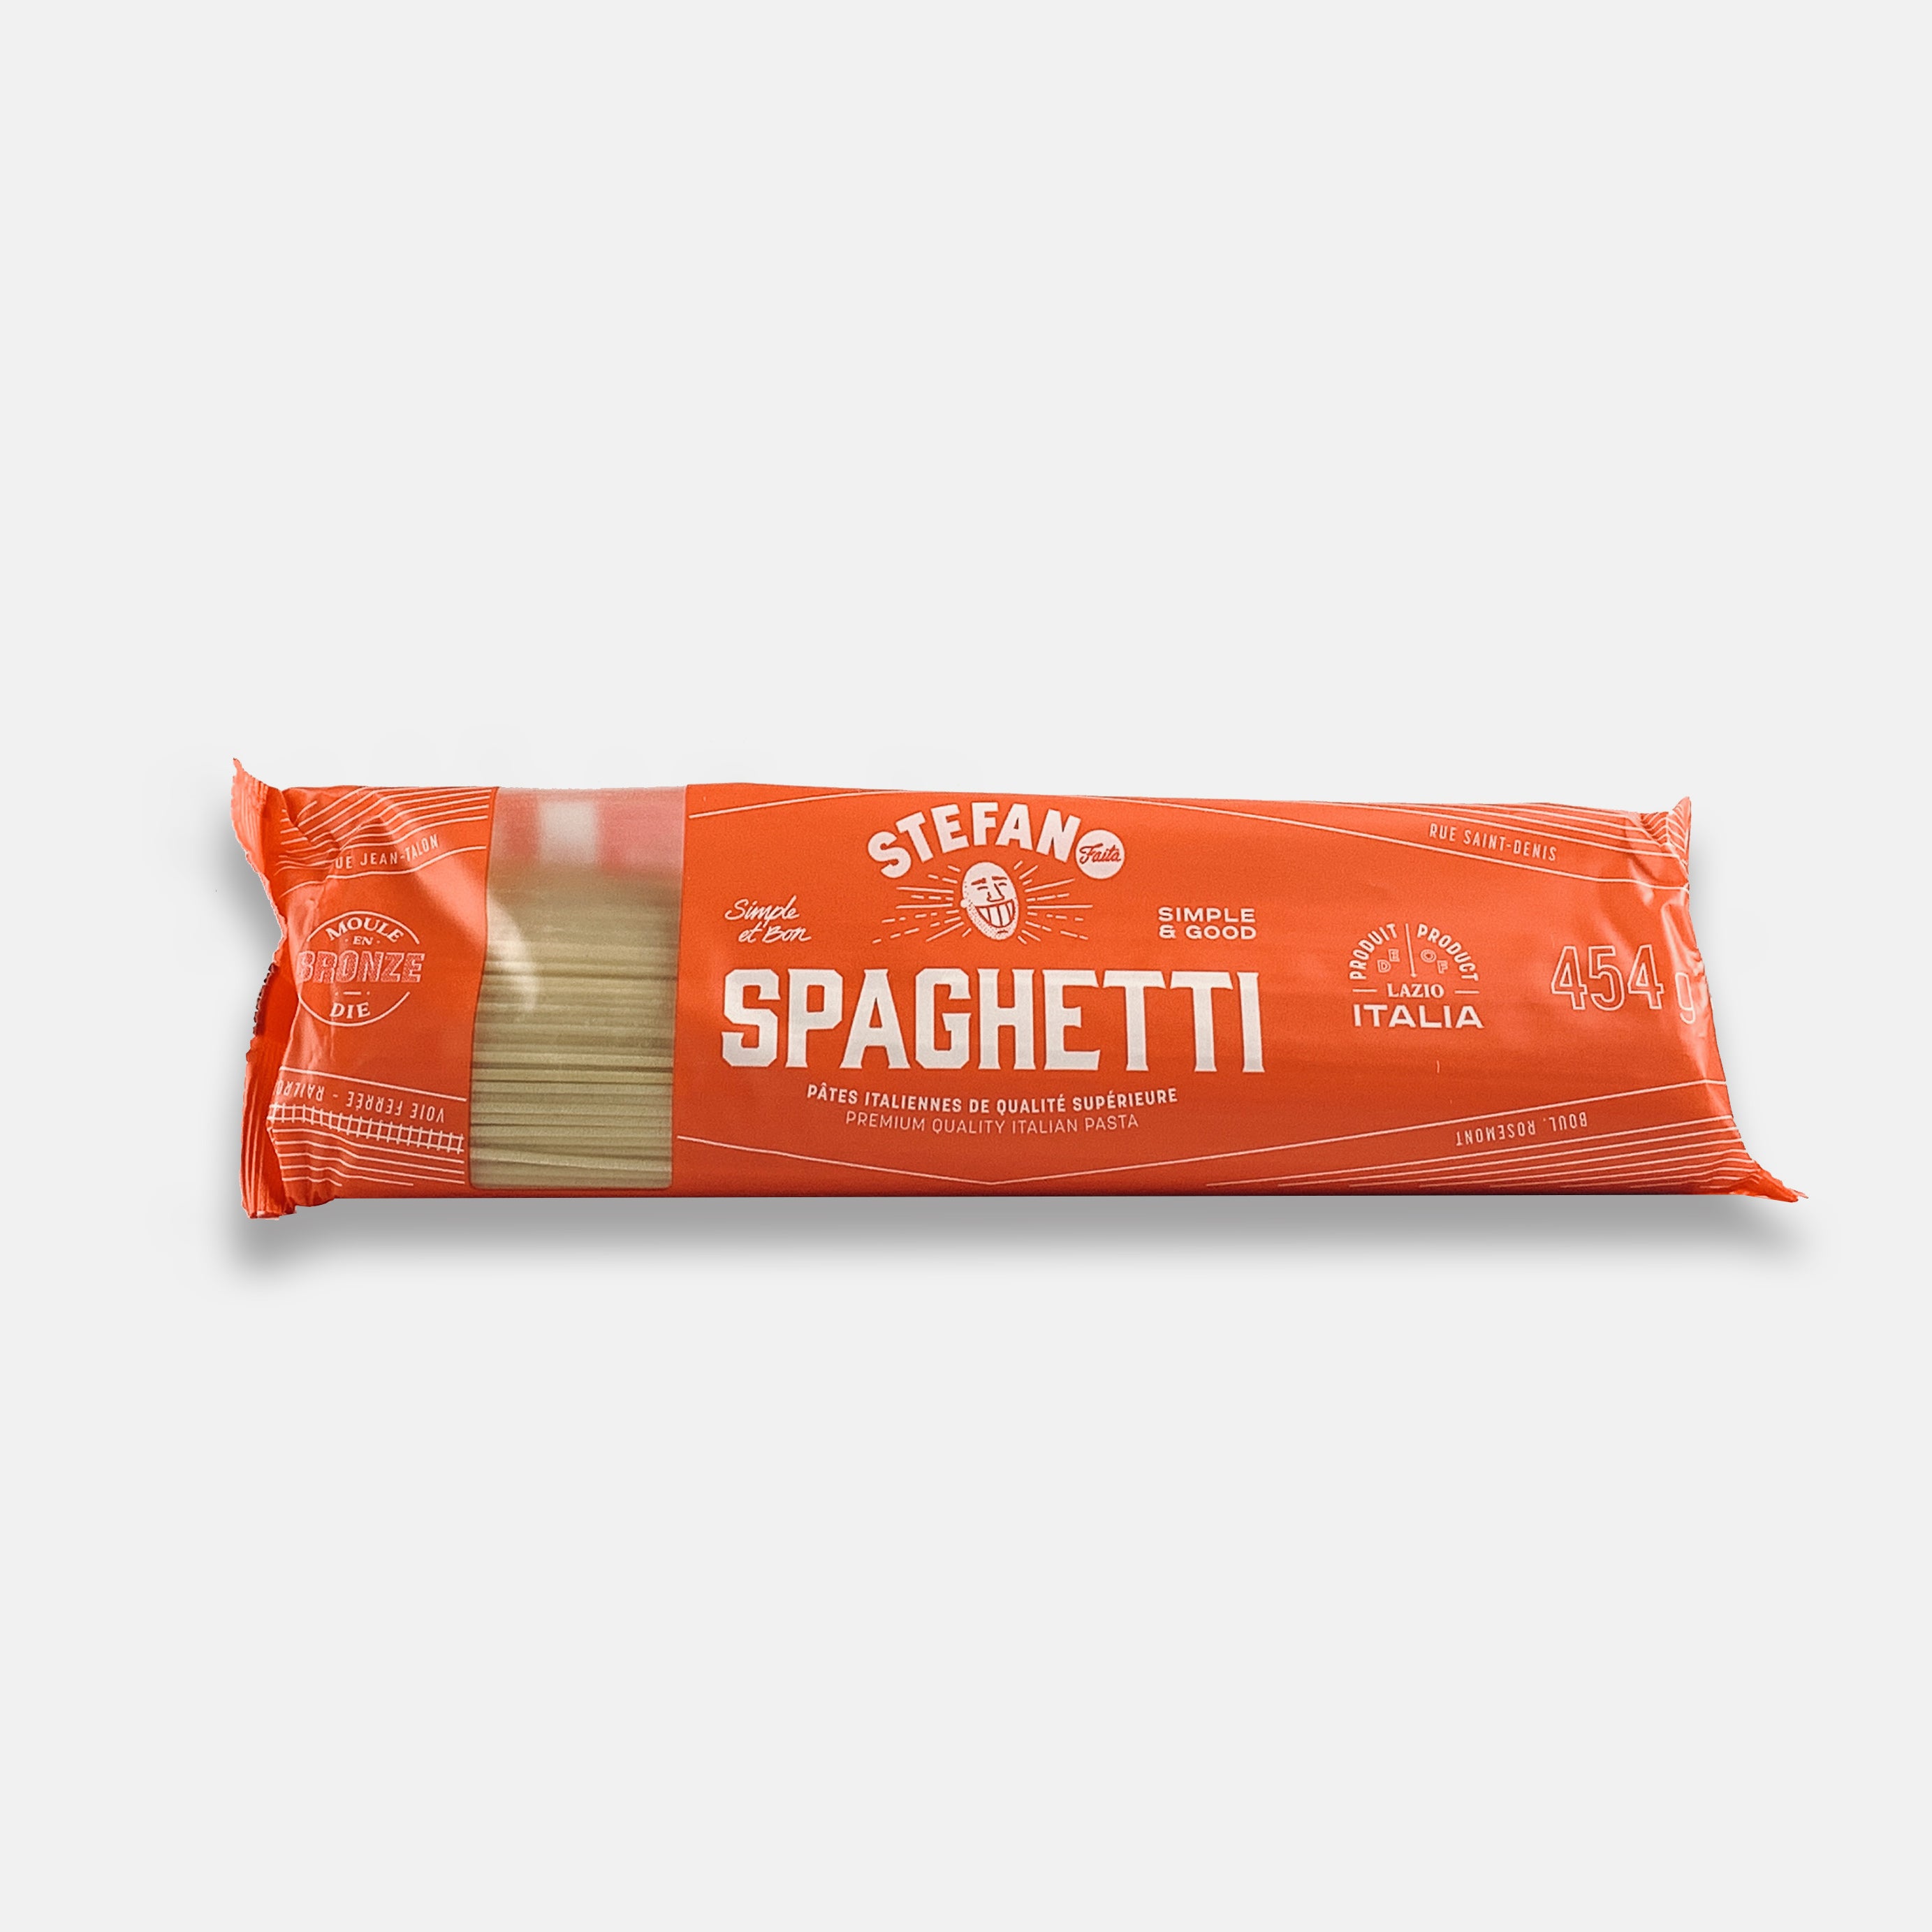 Stefano Premium Quality Spaghetti